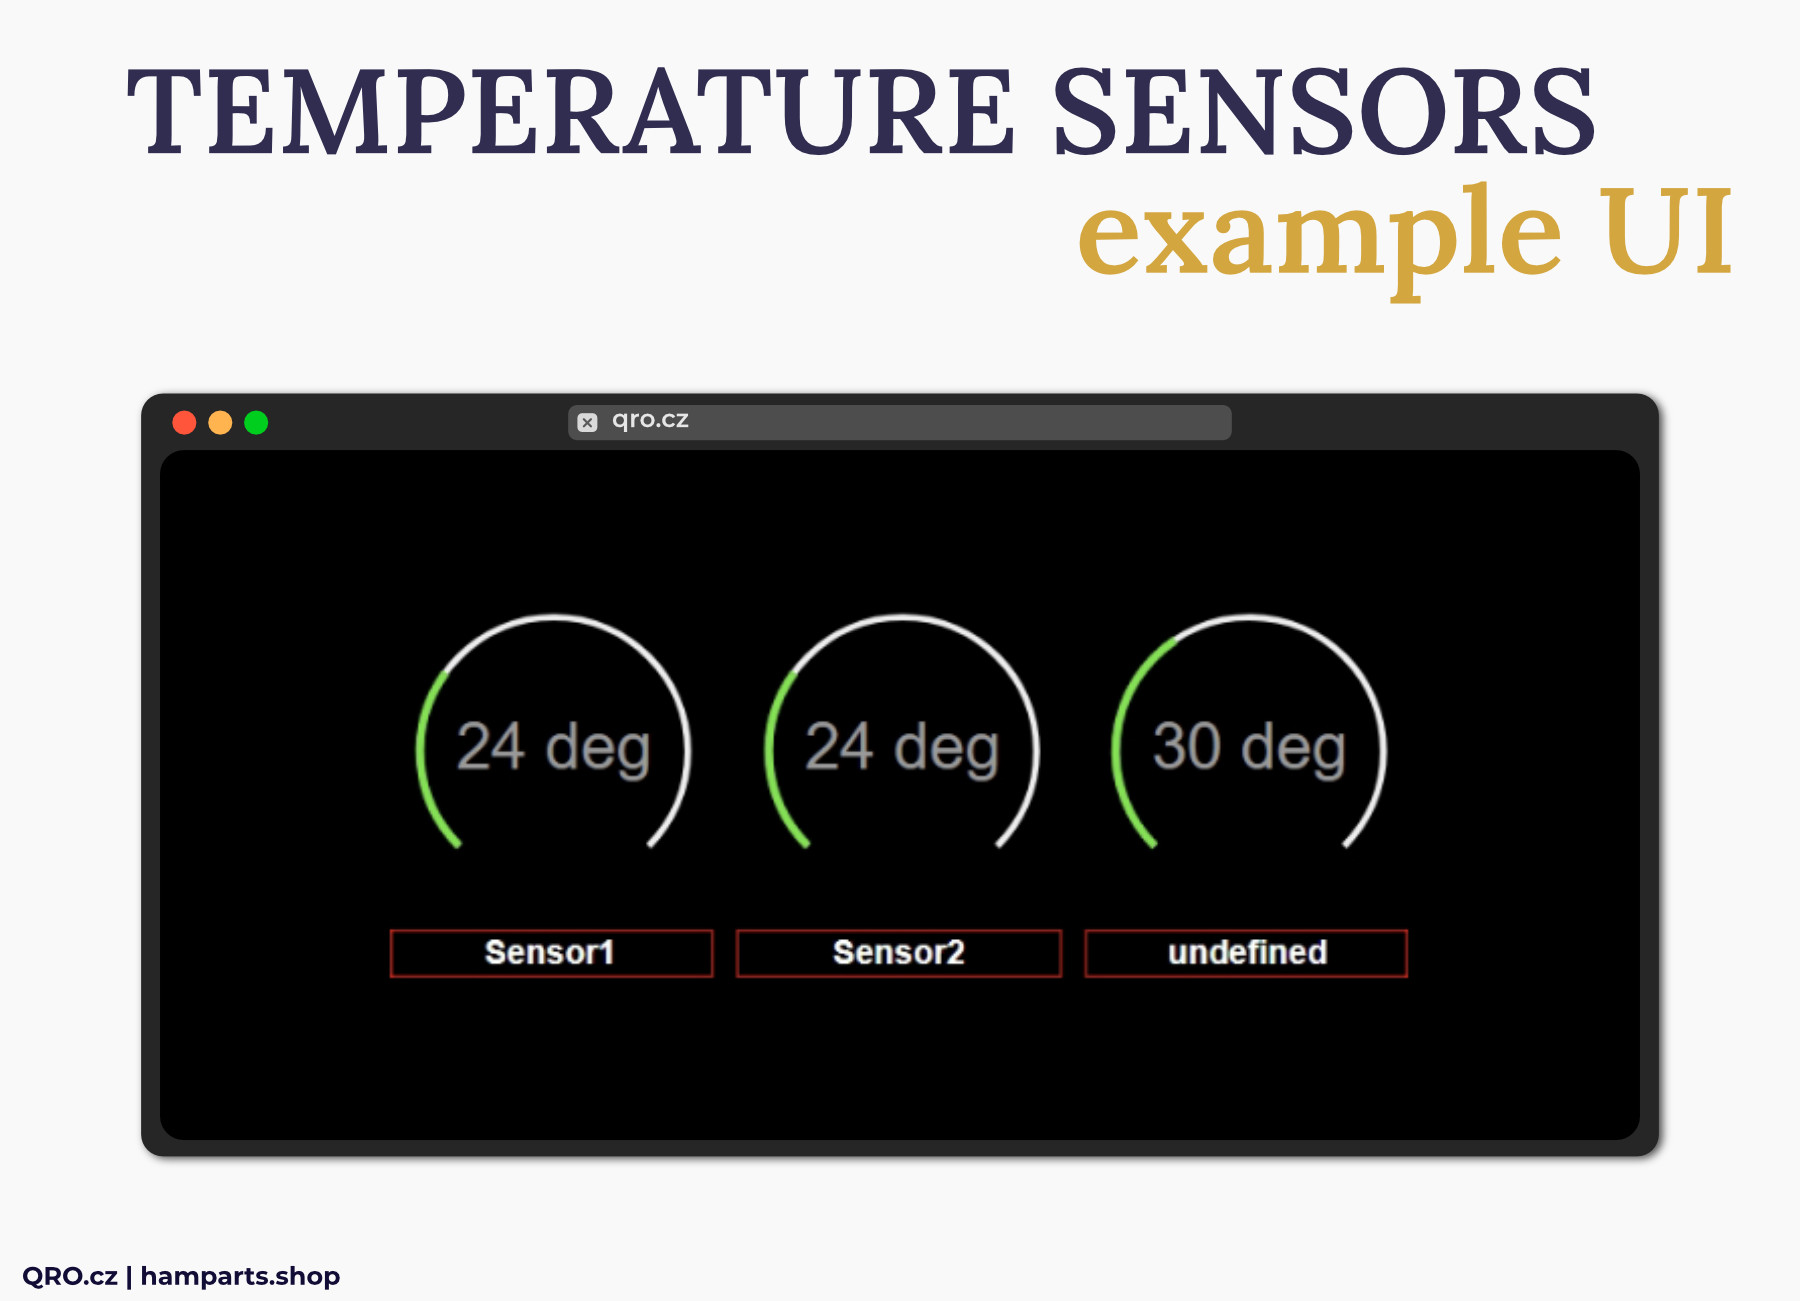 remote control example with temperature sensors 18B20  qro.cz hamparts.shop